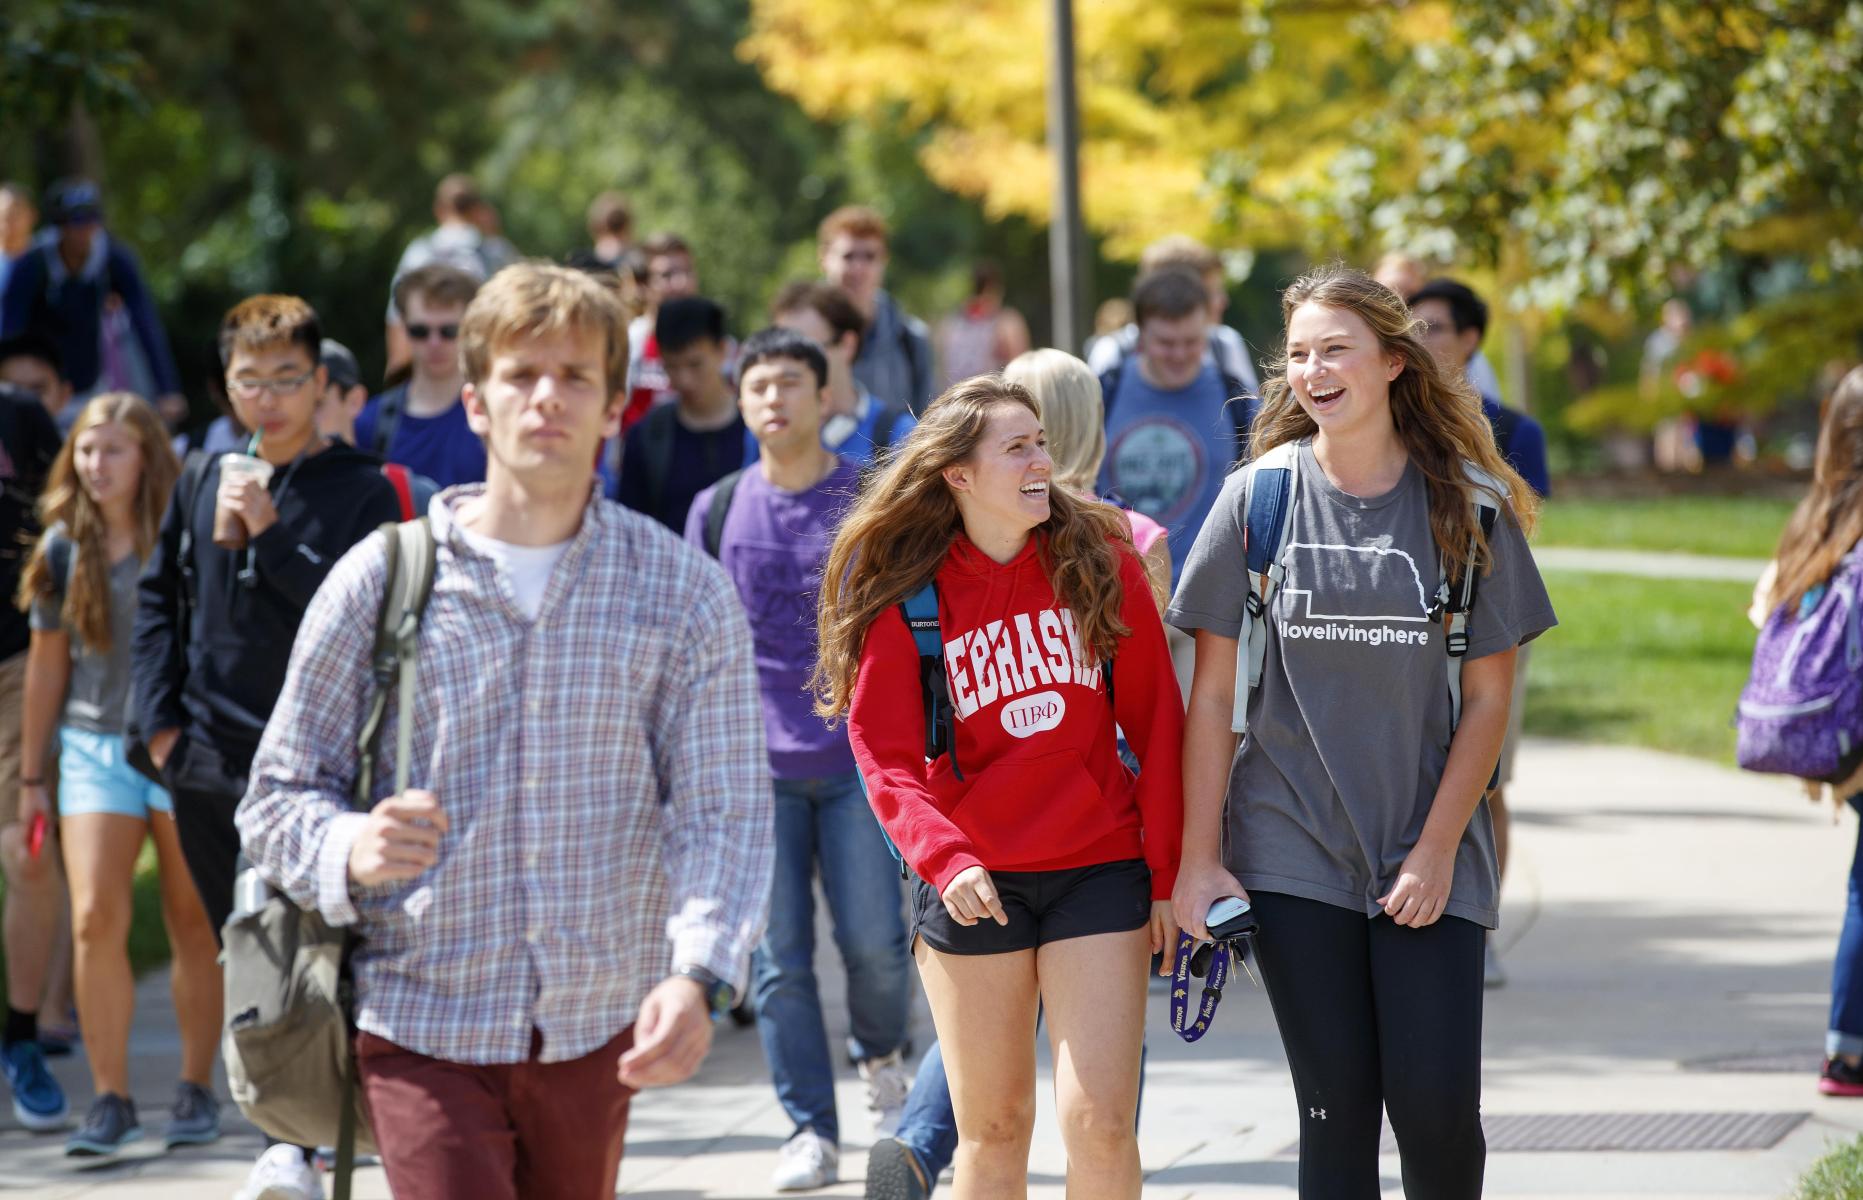 Students walk across campus enjoying conversation on a beautiful day